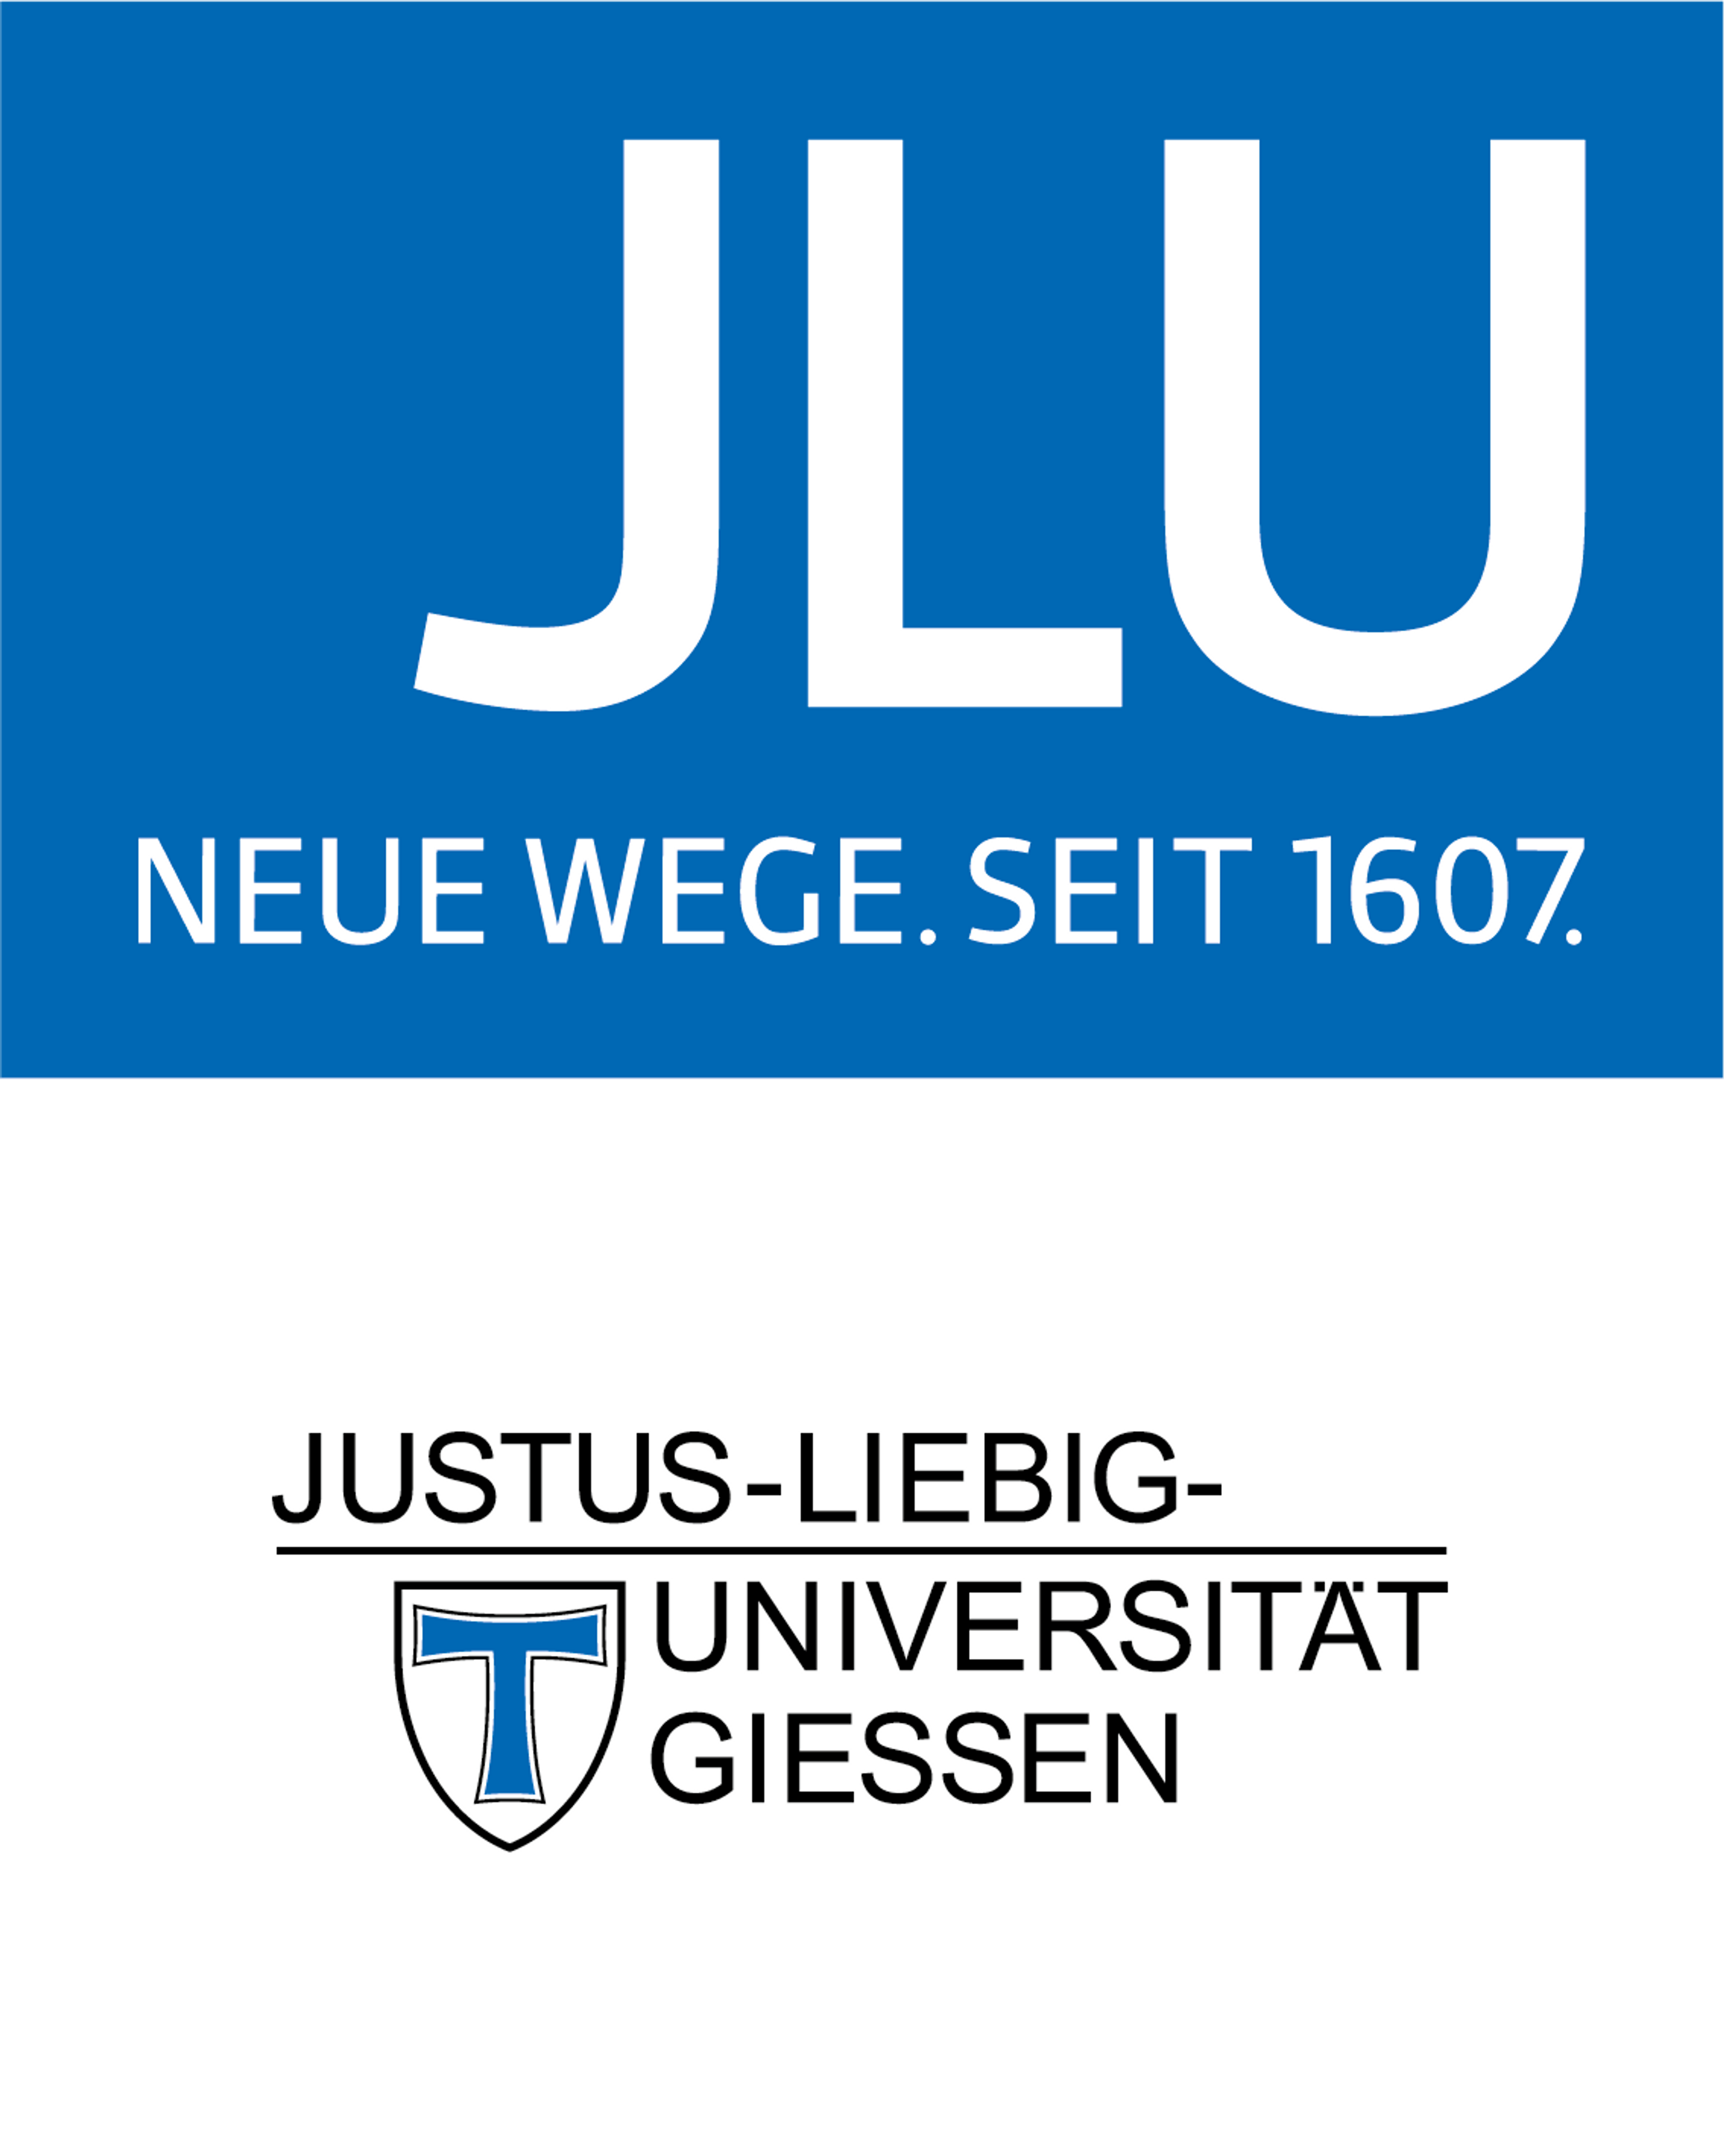 Justus-Liebig-University Giessen